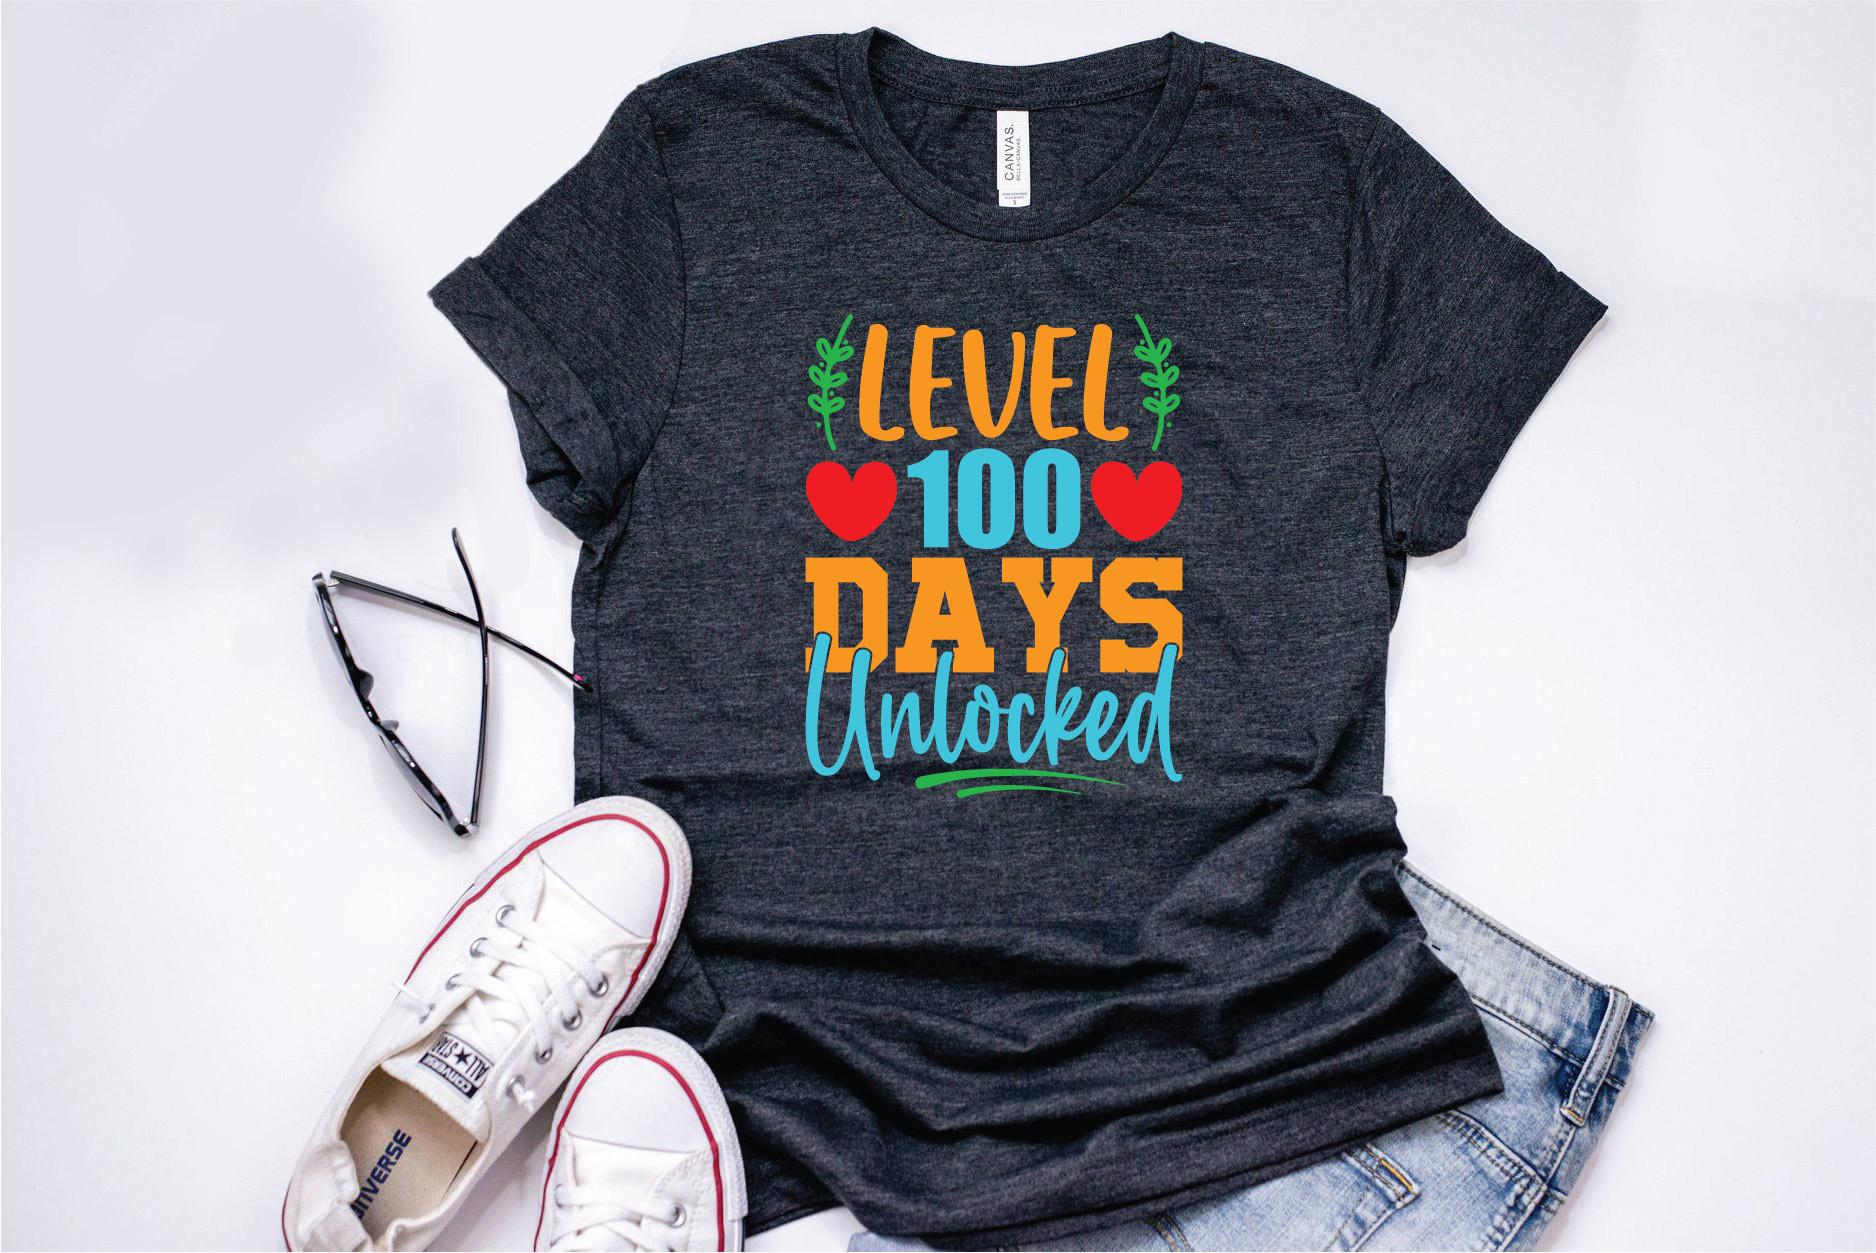 100 Days of School T-Shirt Design